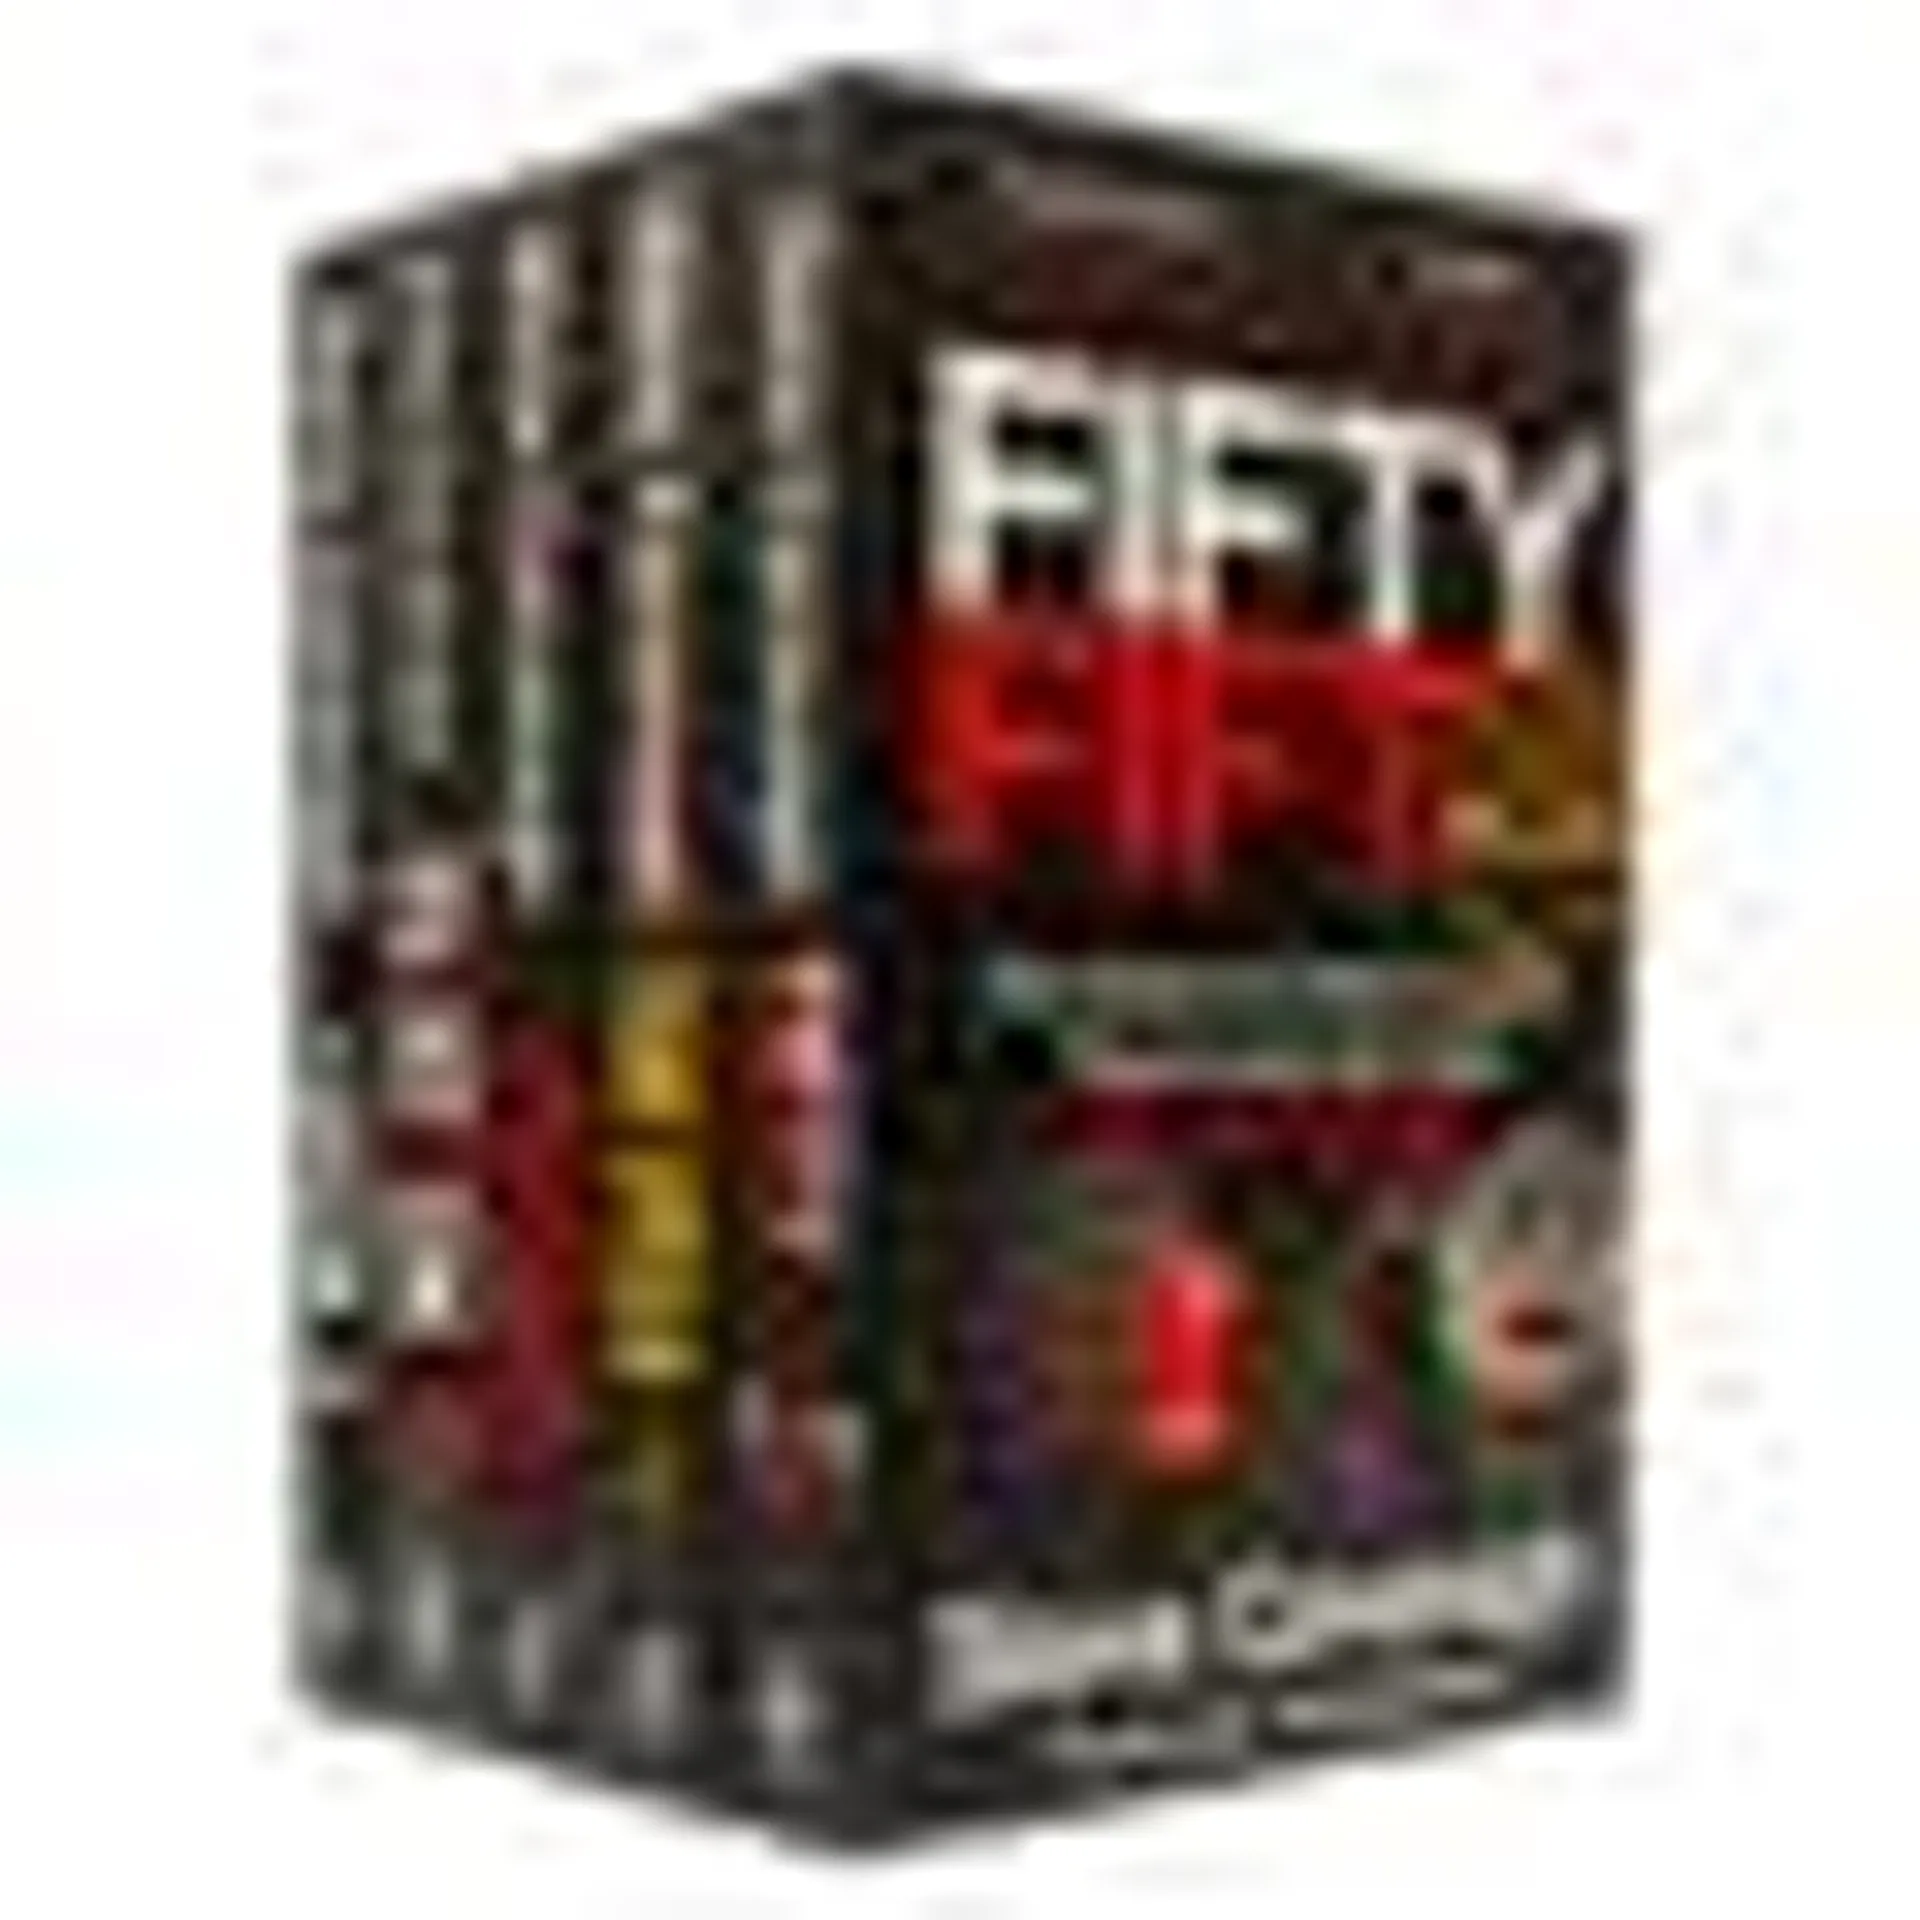 Steve Cavanagh Eddie Flynn Series 5 Books Collection Set Thirteen The Defence The Plea The Liar Fifty Fifty